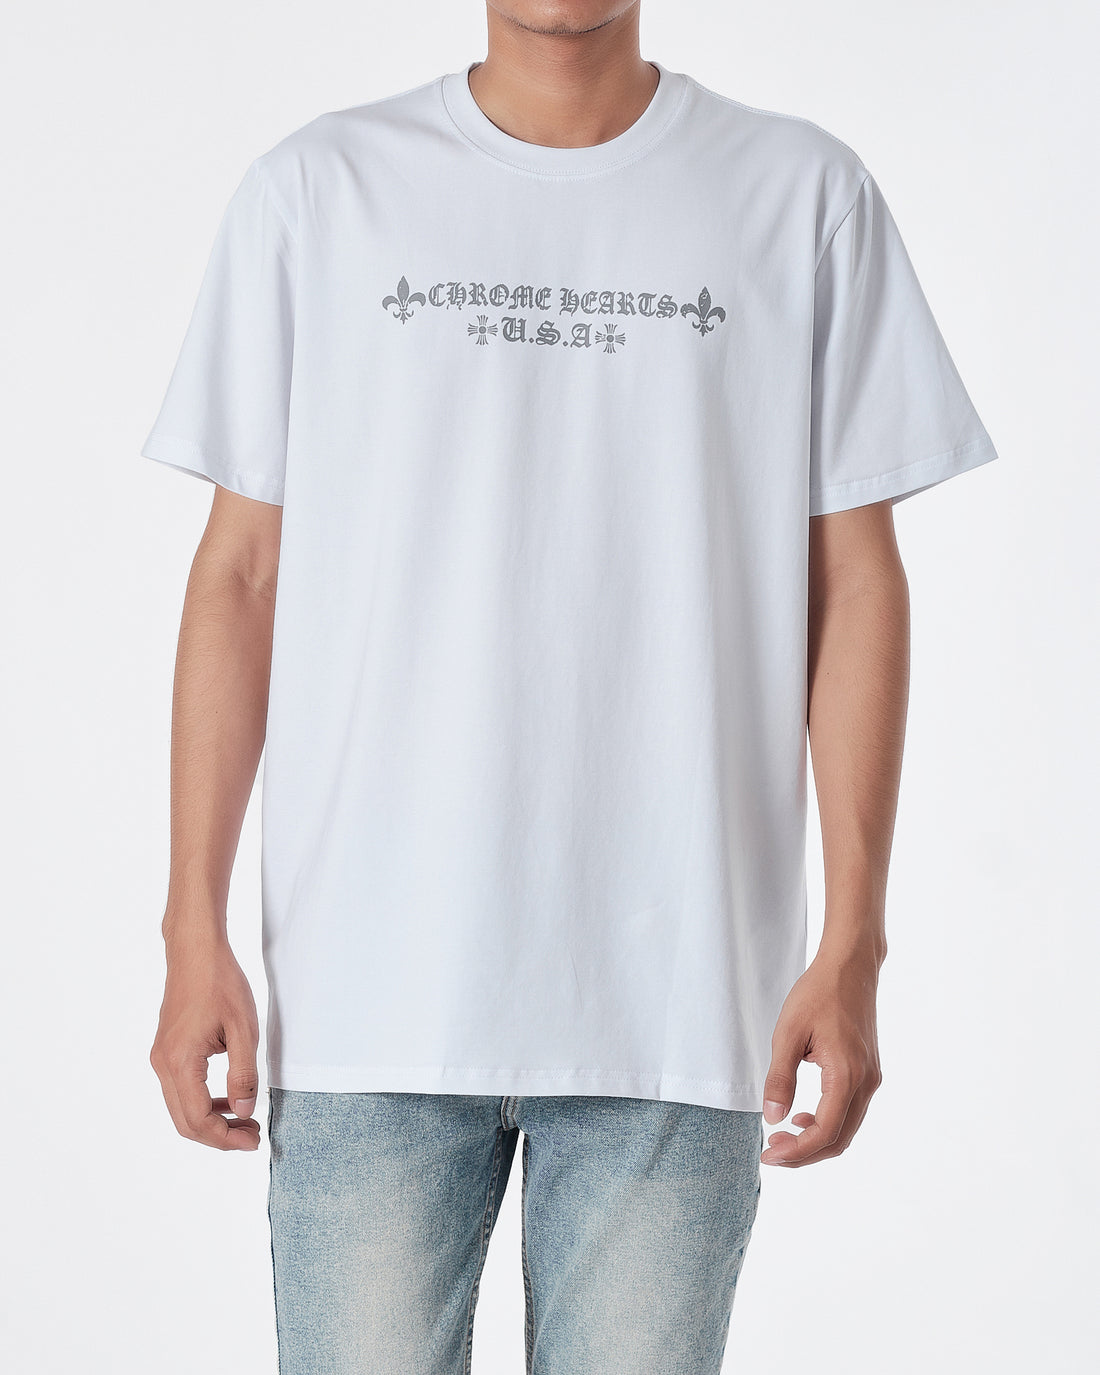 CH Cross Back Logo Printed Men White T-Shirt 16.90